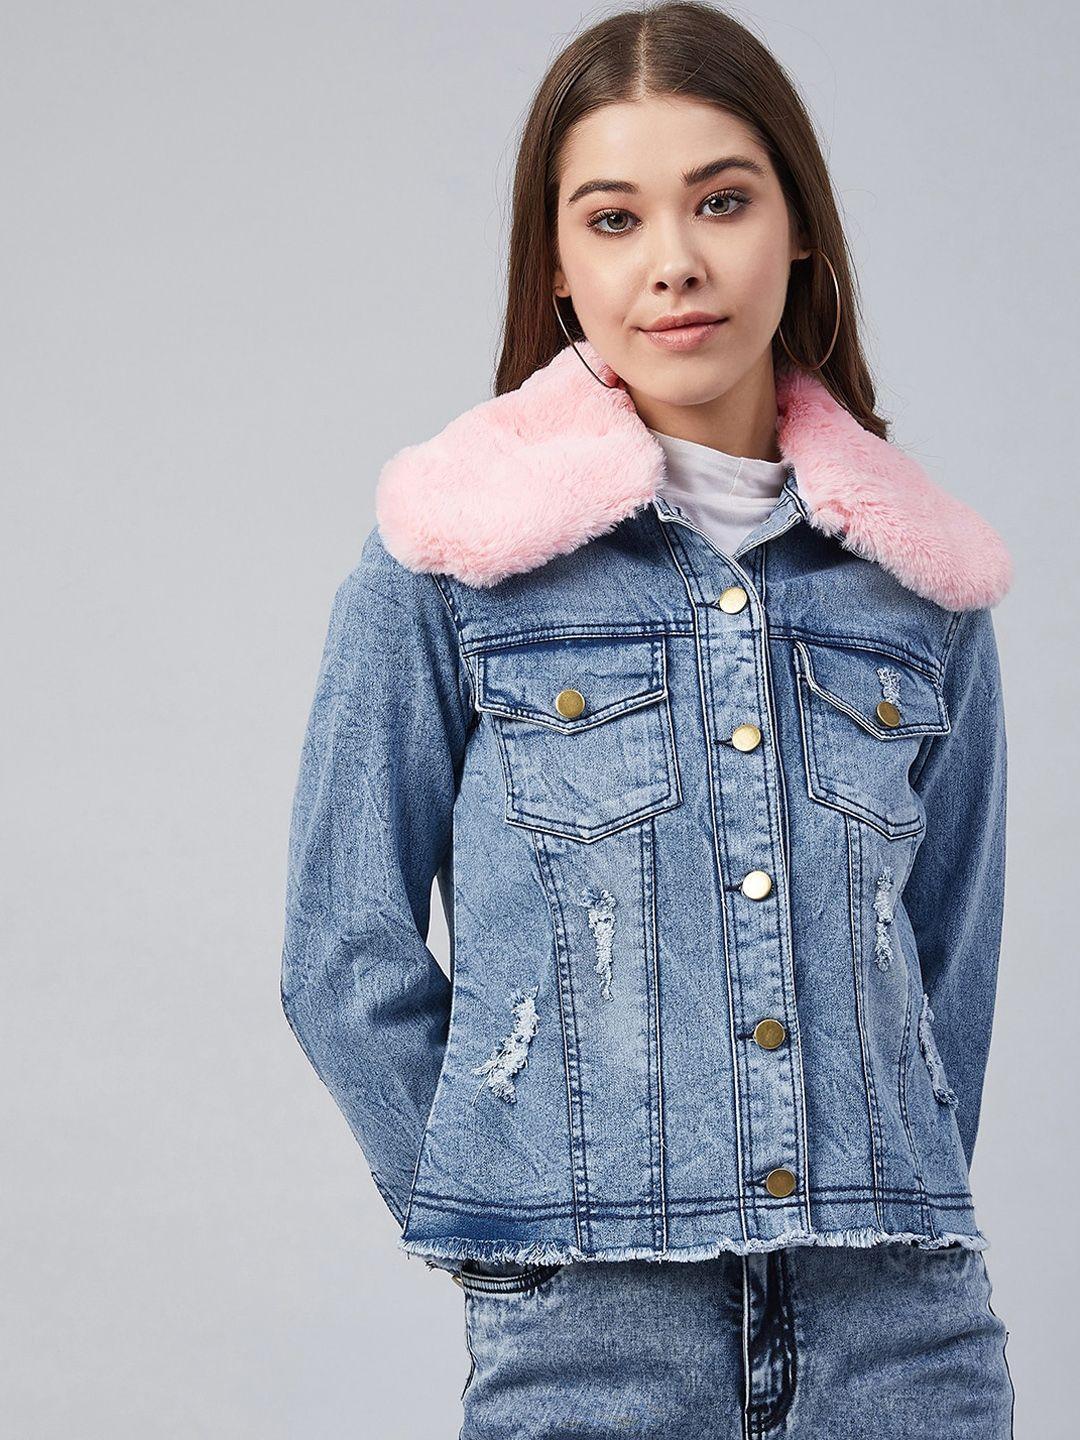 stylestone women blue pink solid denim jacket